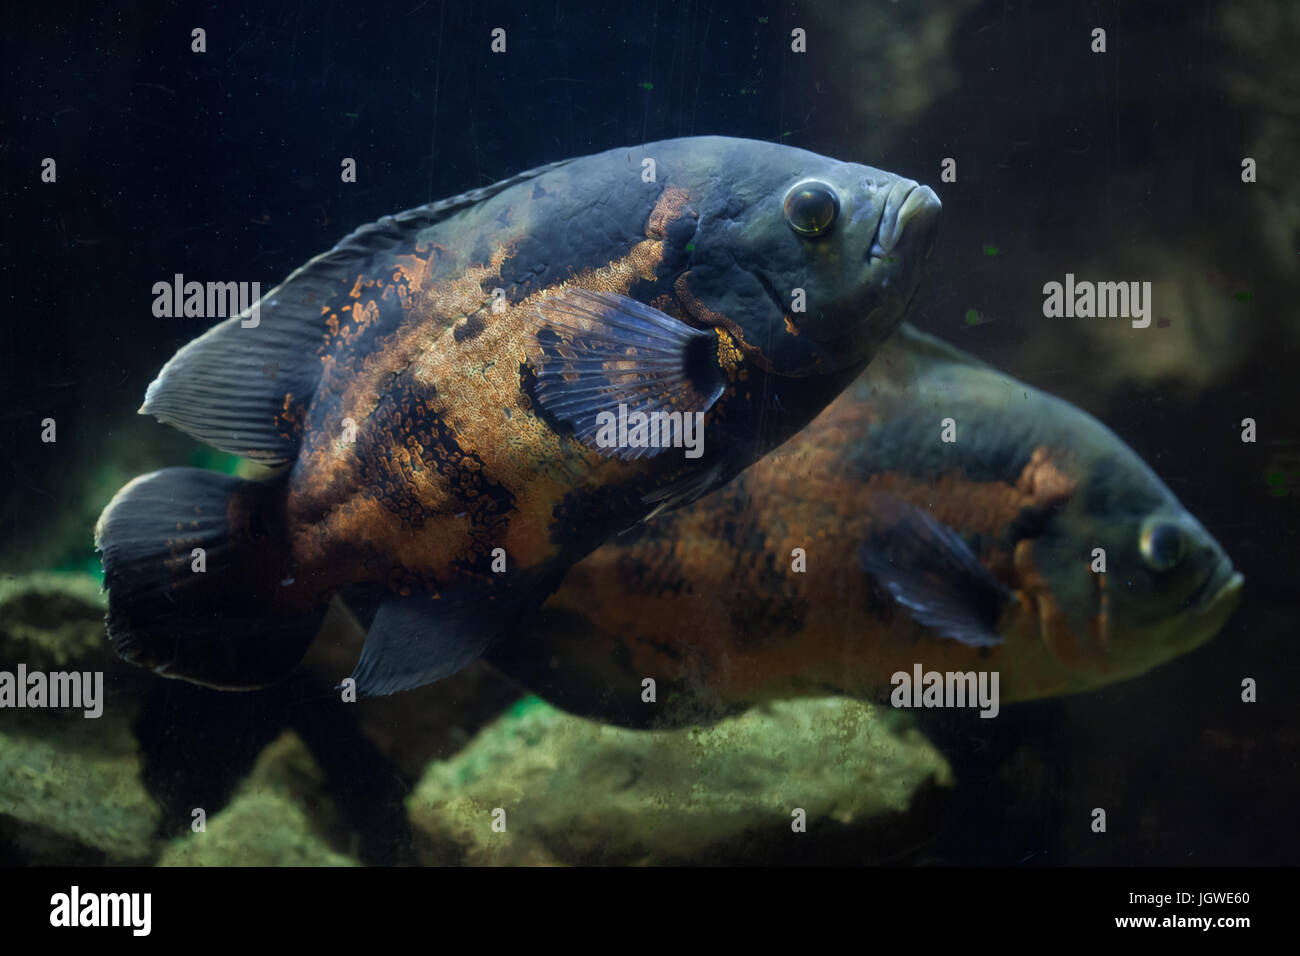 Oscar fish (Astronotus ocellatus). Tropical freshwater fish. Stock Photo